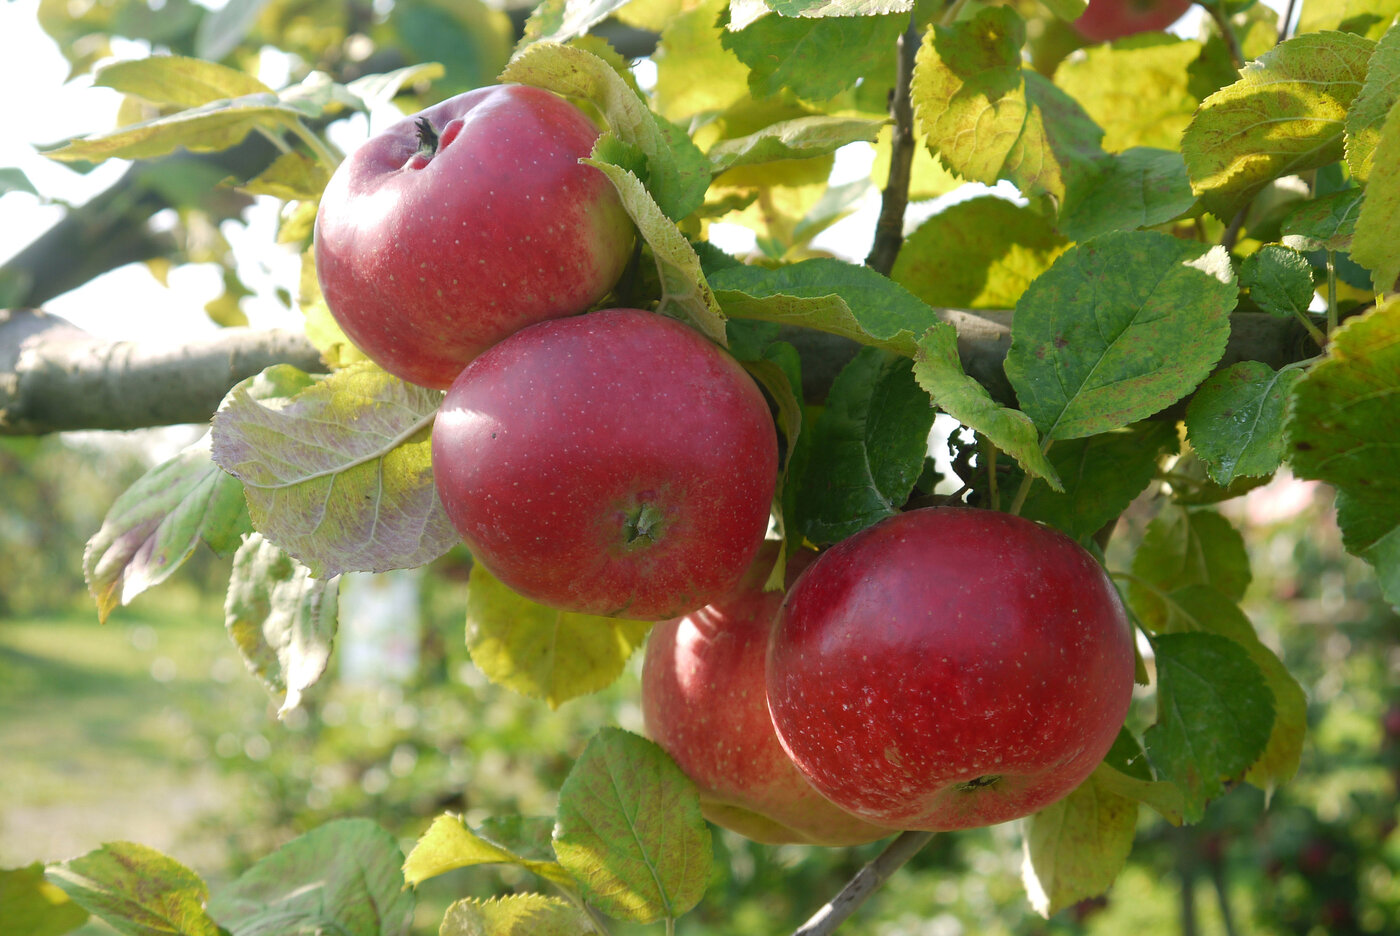 Apfelbaumzweige mit mehreren reifen Äpfeln der Sorte Uelzener Rambour